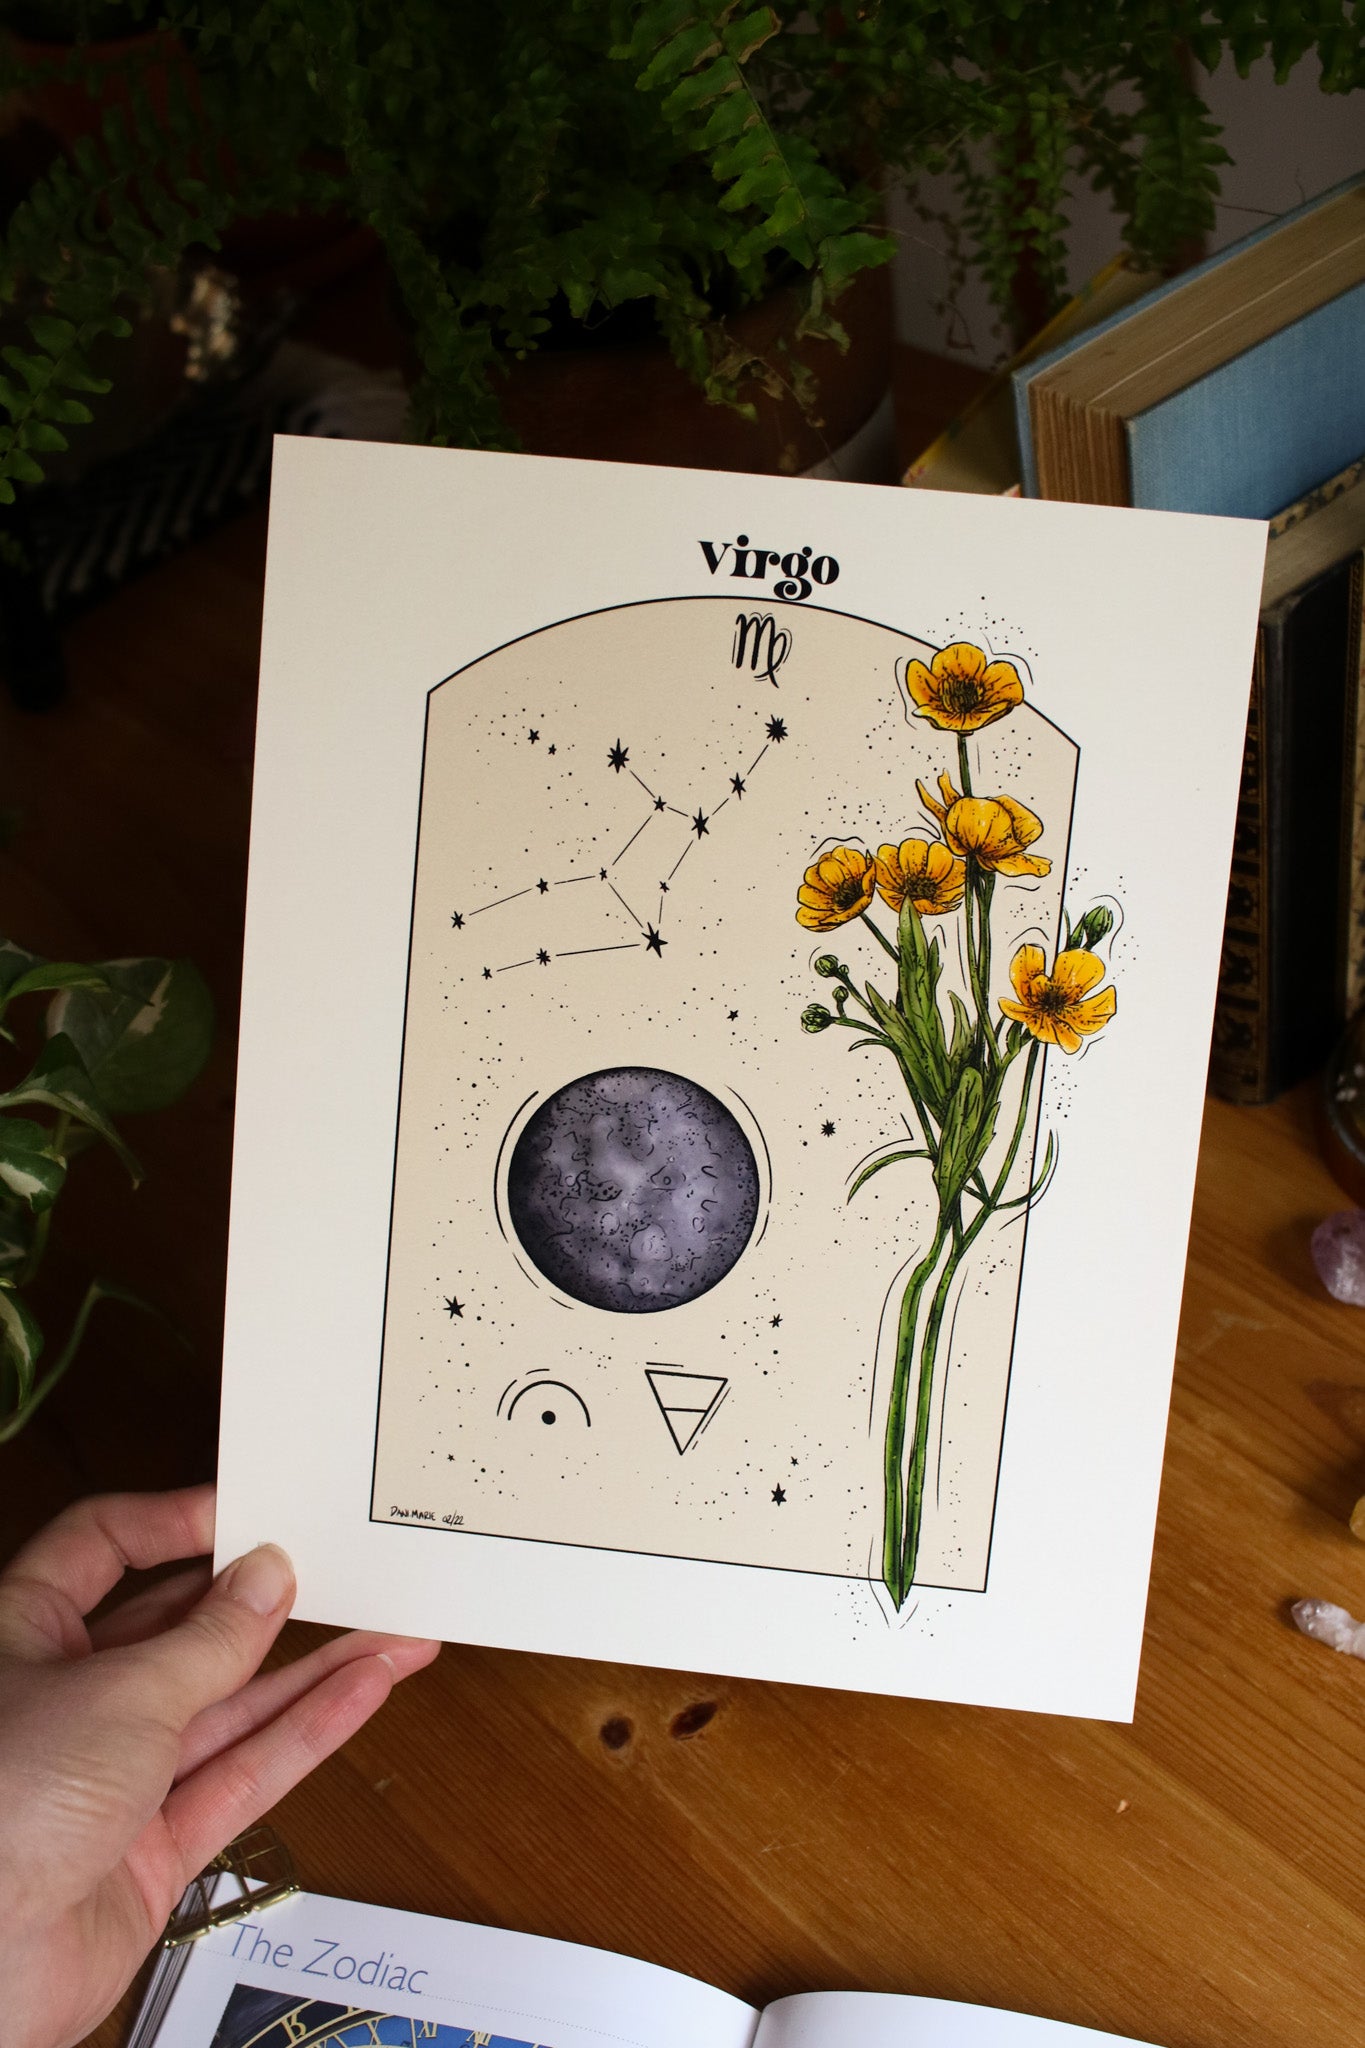 Virgo - Astrology Infographic